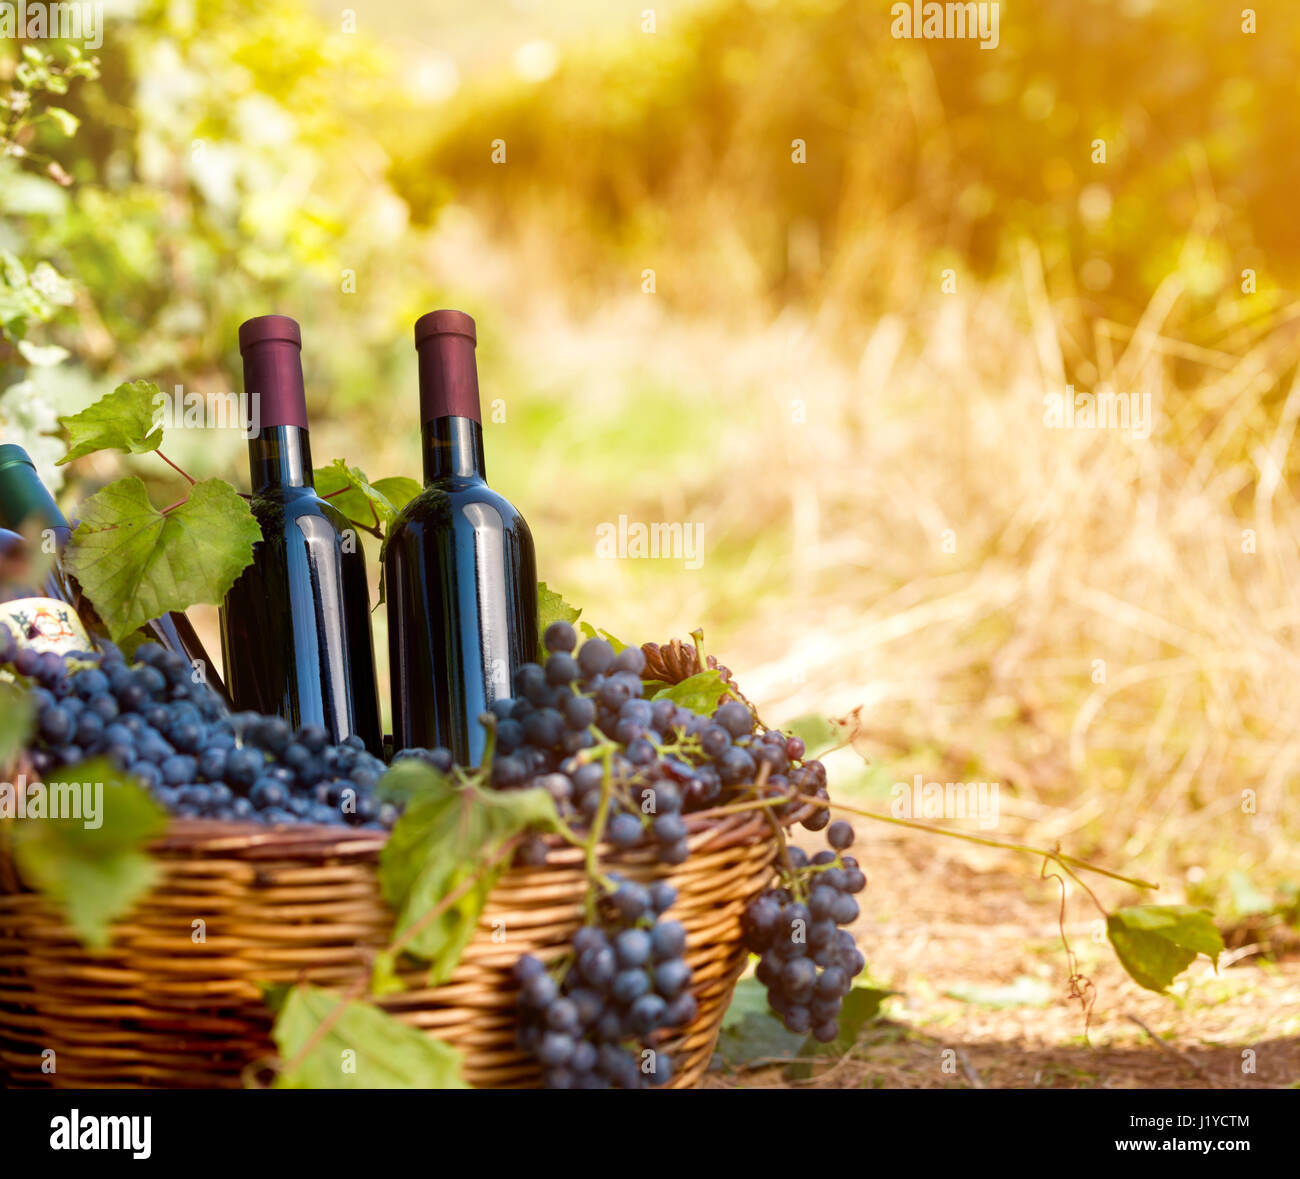 basket of wine bottles in vineyard Stock Photo